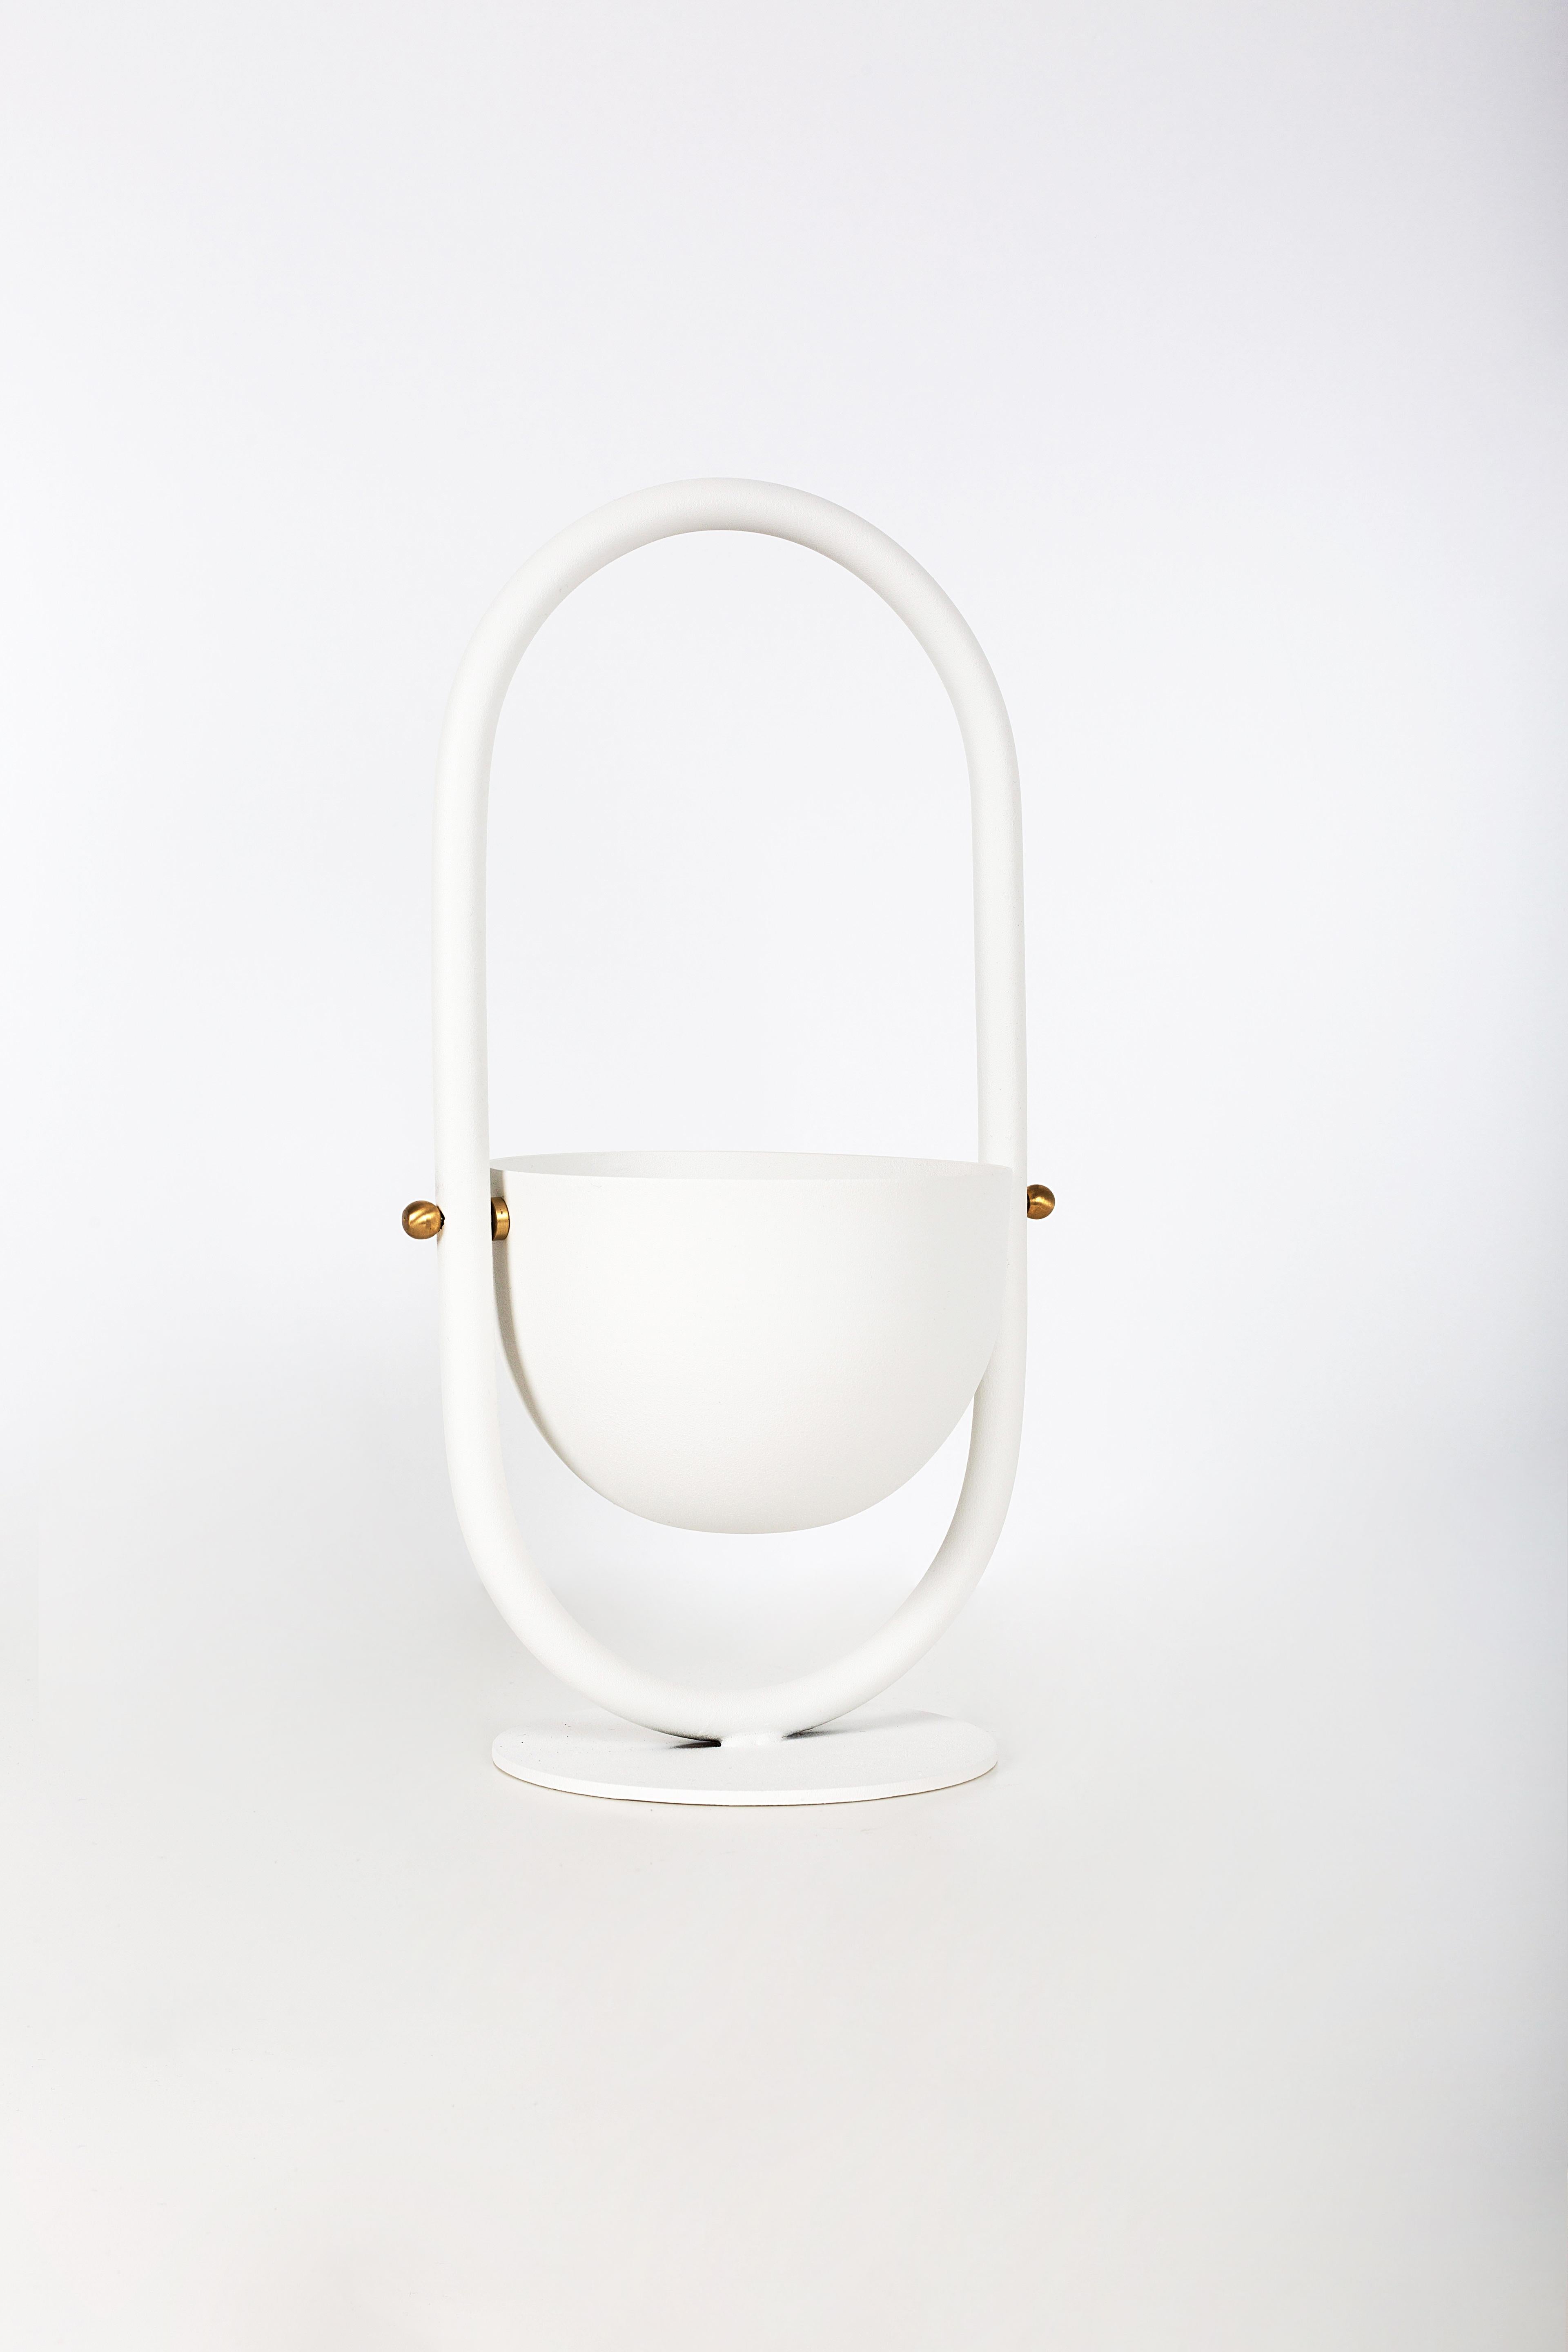 Métal Bol/vase blanc de Sienne de Studio Laf en vente